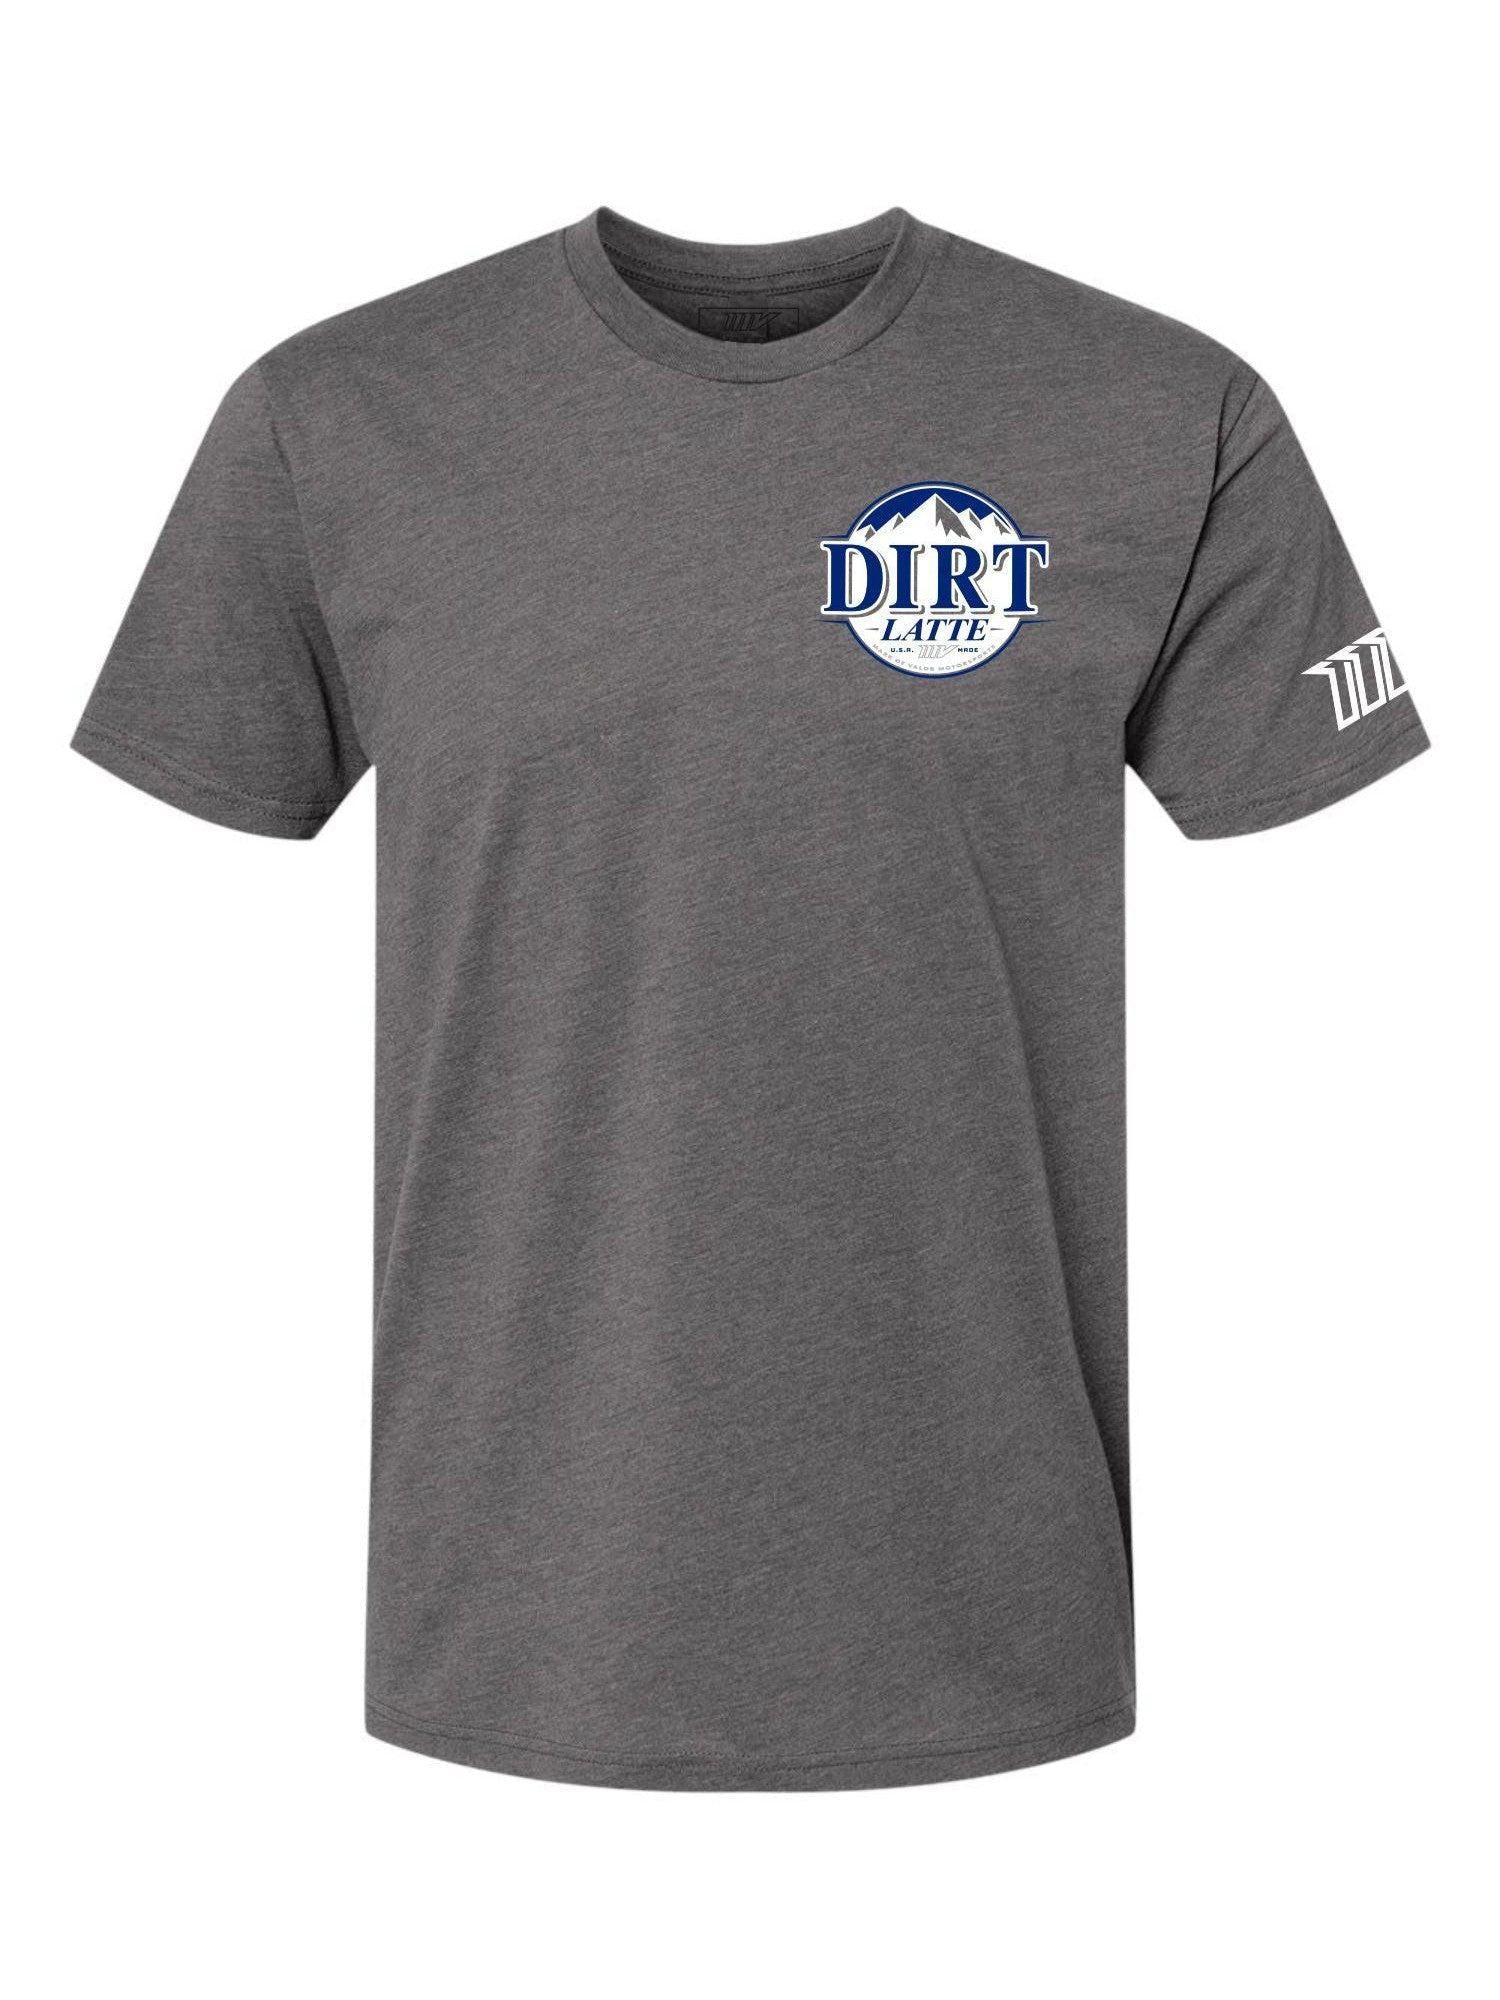 Down and Dirty - Performance Shirt - Fishing Shirt 2x - Large / White